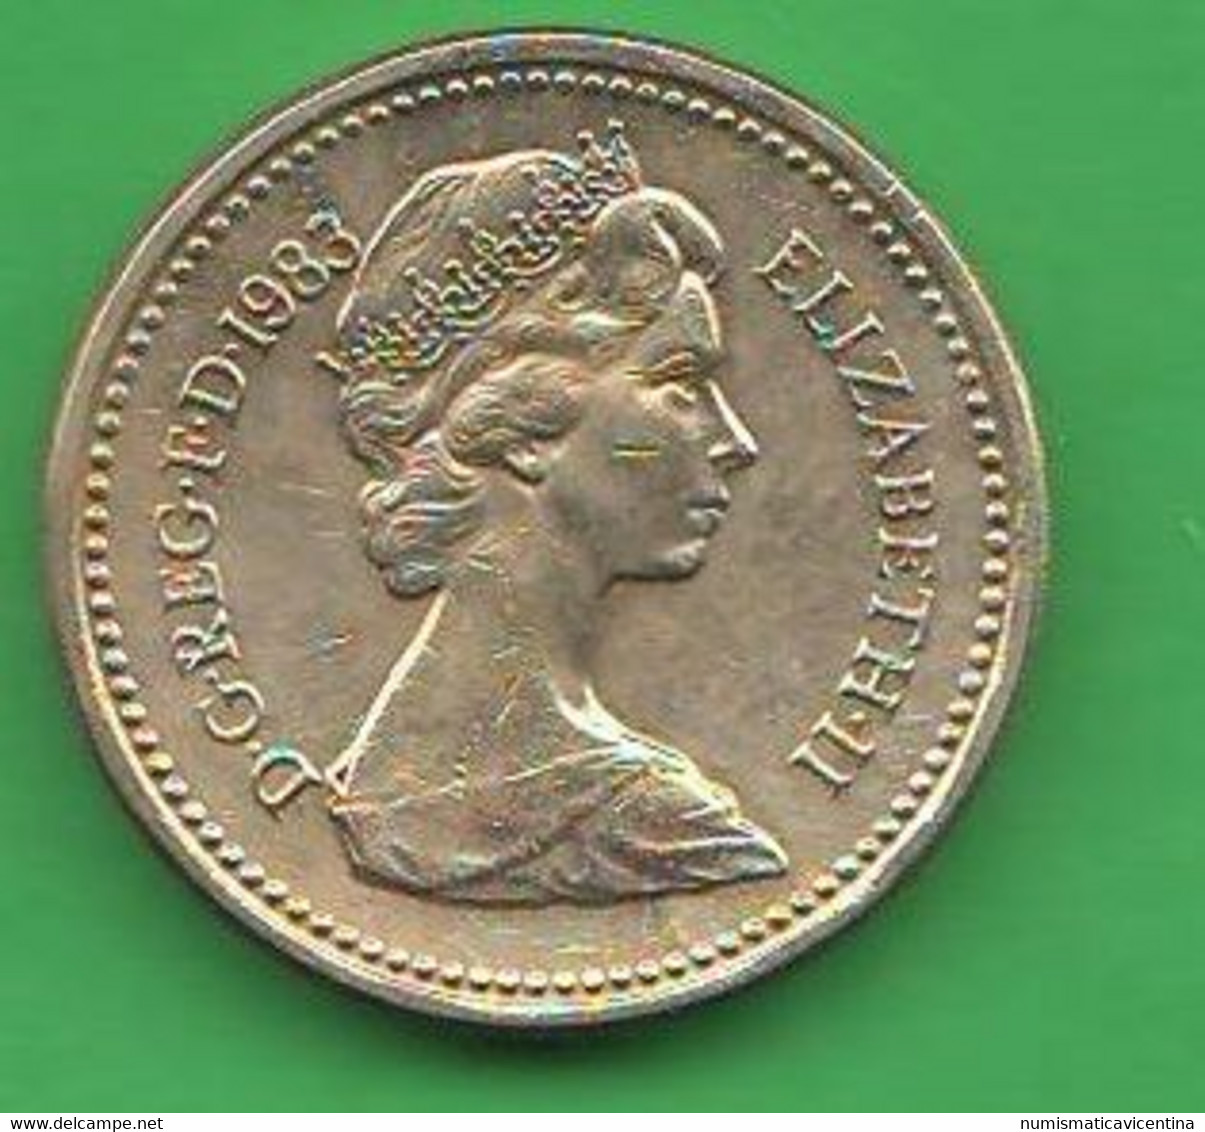 Great Britain 1 Pound 1983 Inghilterra United Kingdom Angleterre Brass Coin - 2 Pond